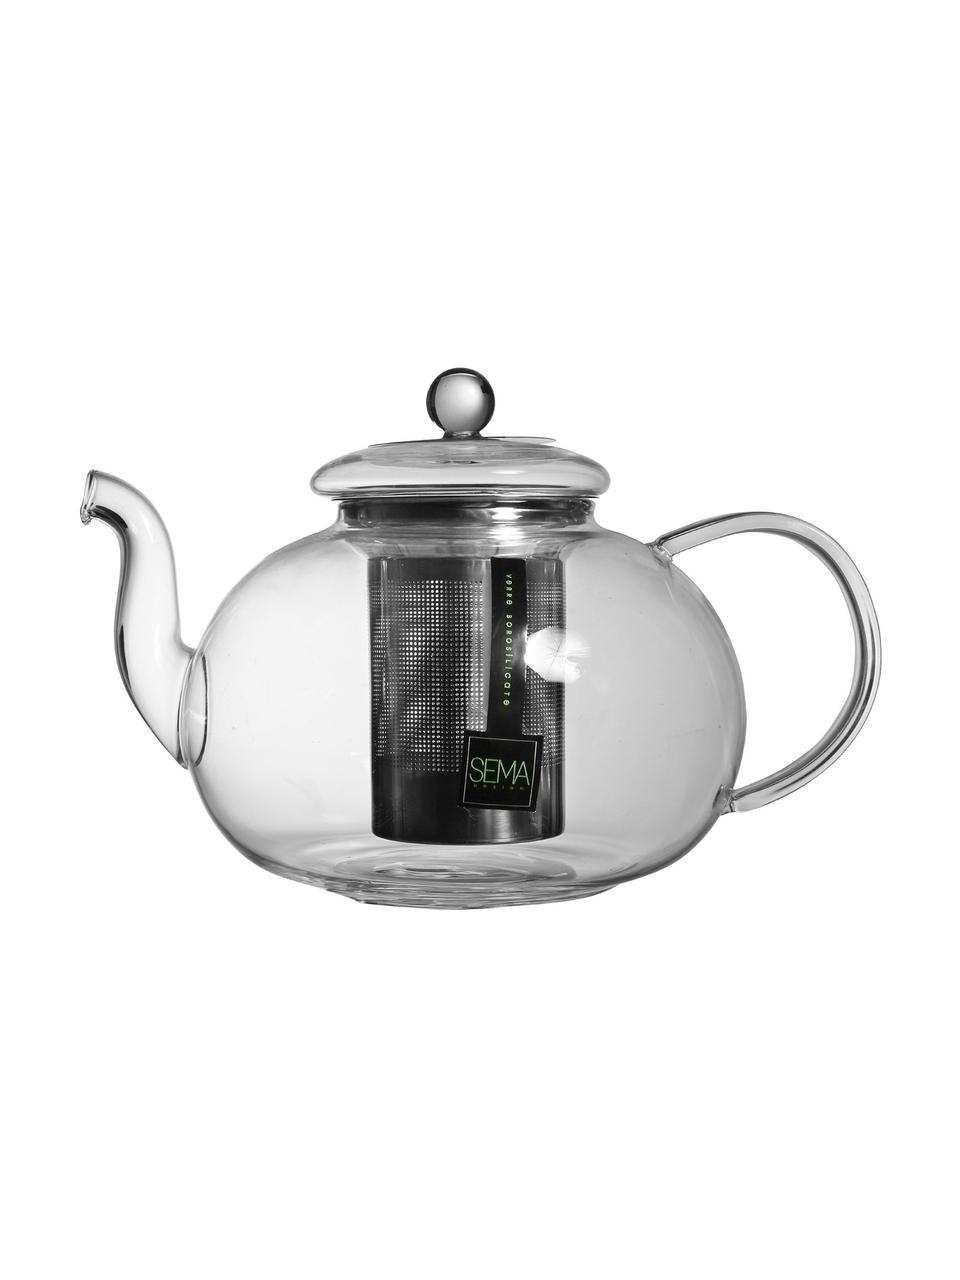 Tetera con infusor para té y tapa Argyle, 1,4 L, Tetera: vidrio, Transparente, plateado, 1,4 L